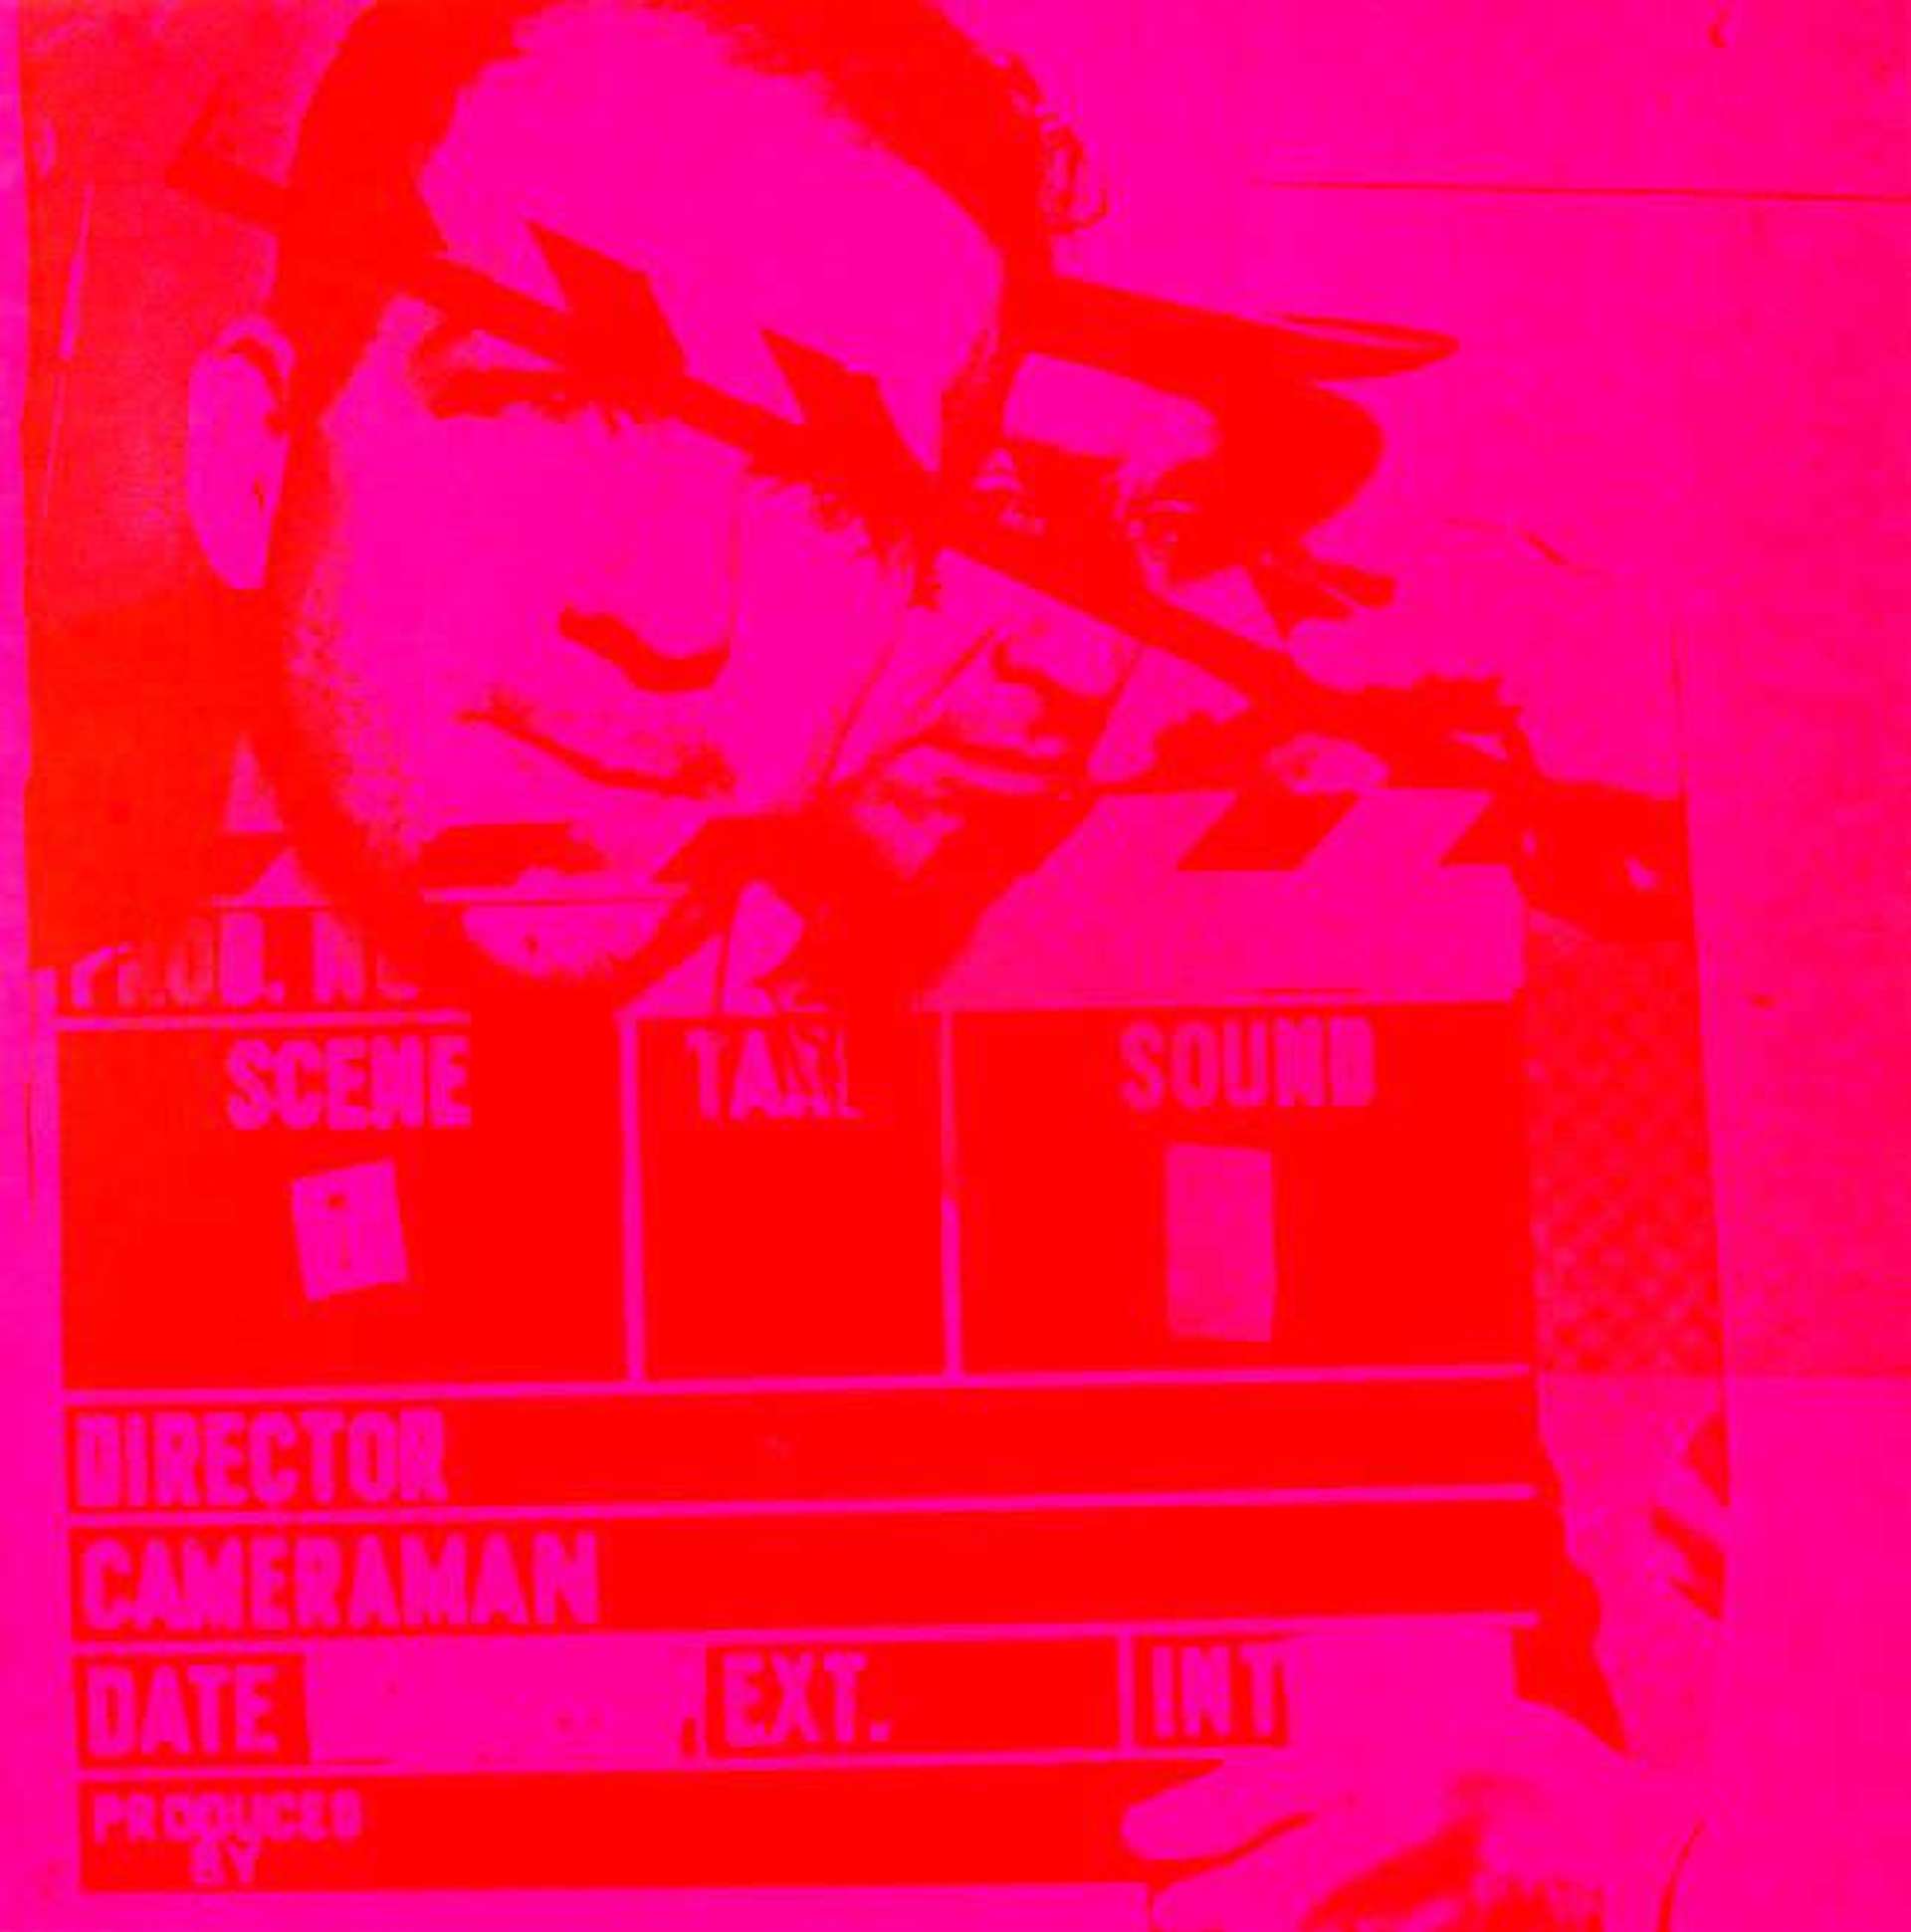 Andy Warhol: Flash November 22 (F. & S. II.36) - Signed Print